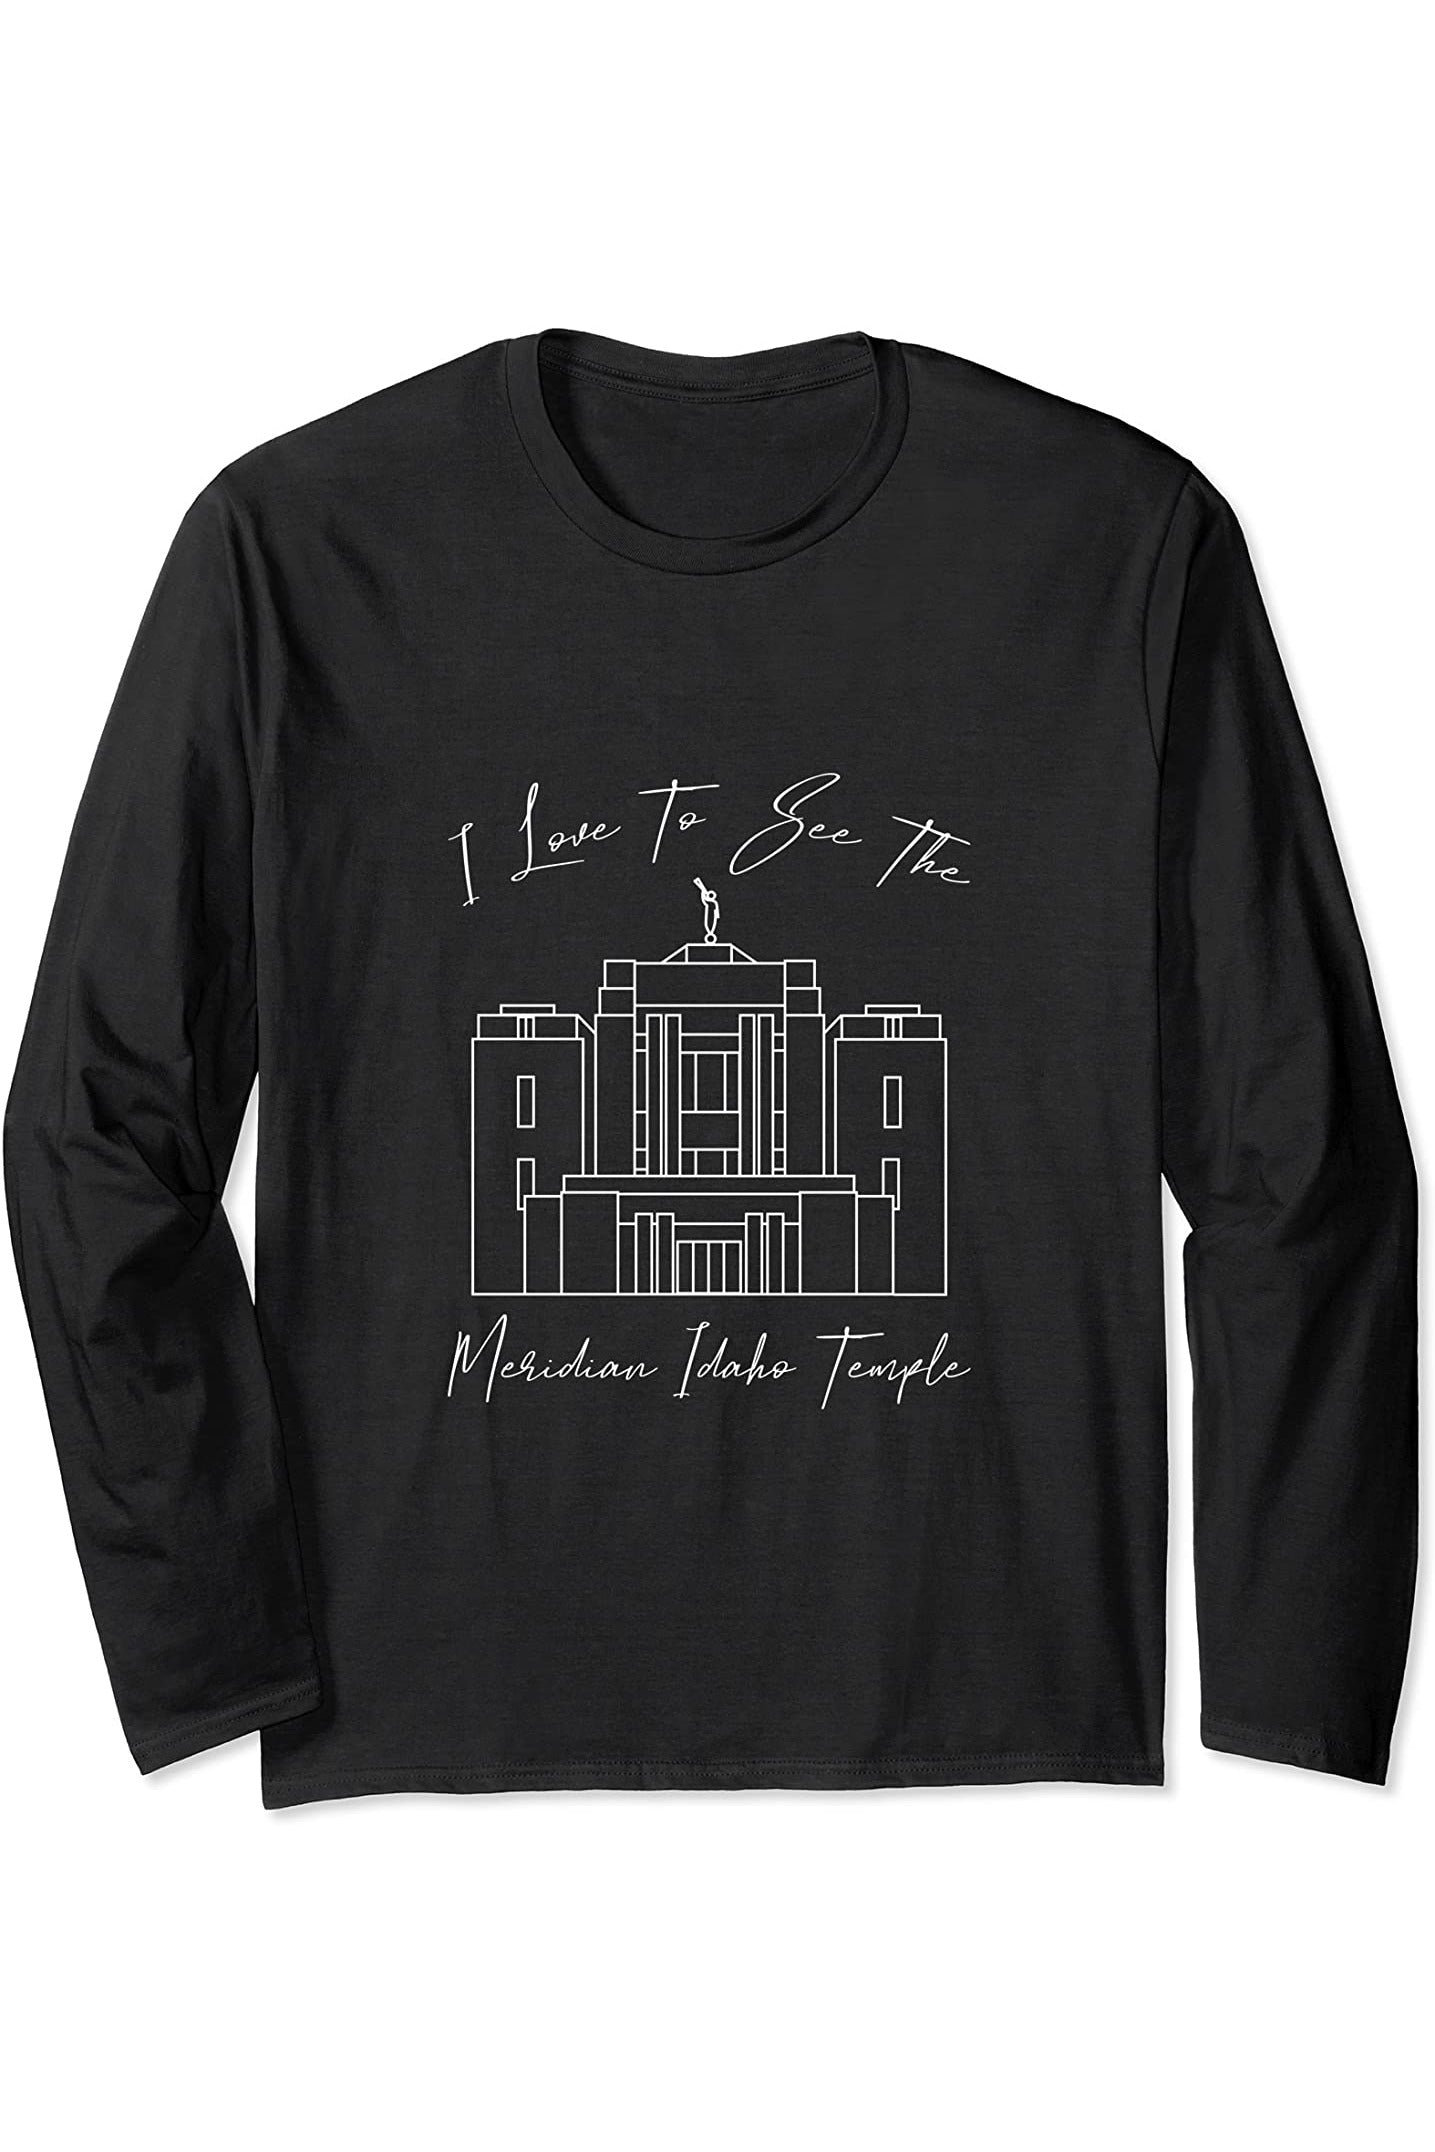 Meridian Idaho Temple Long Sleeve T-Shirt - Calligraphy Style (English) US